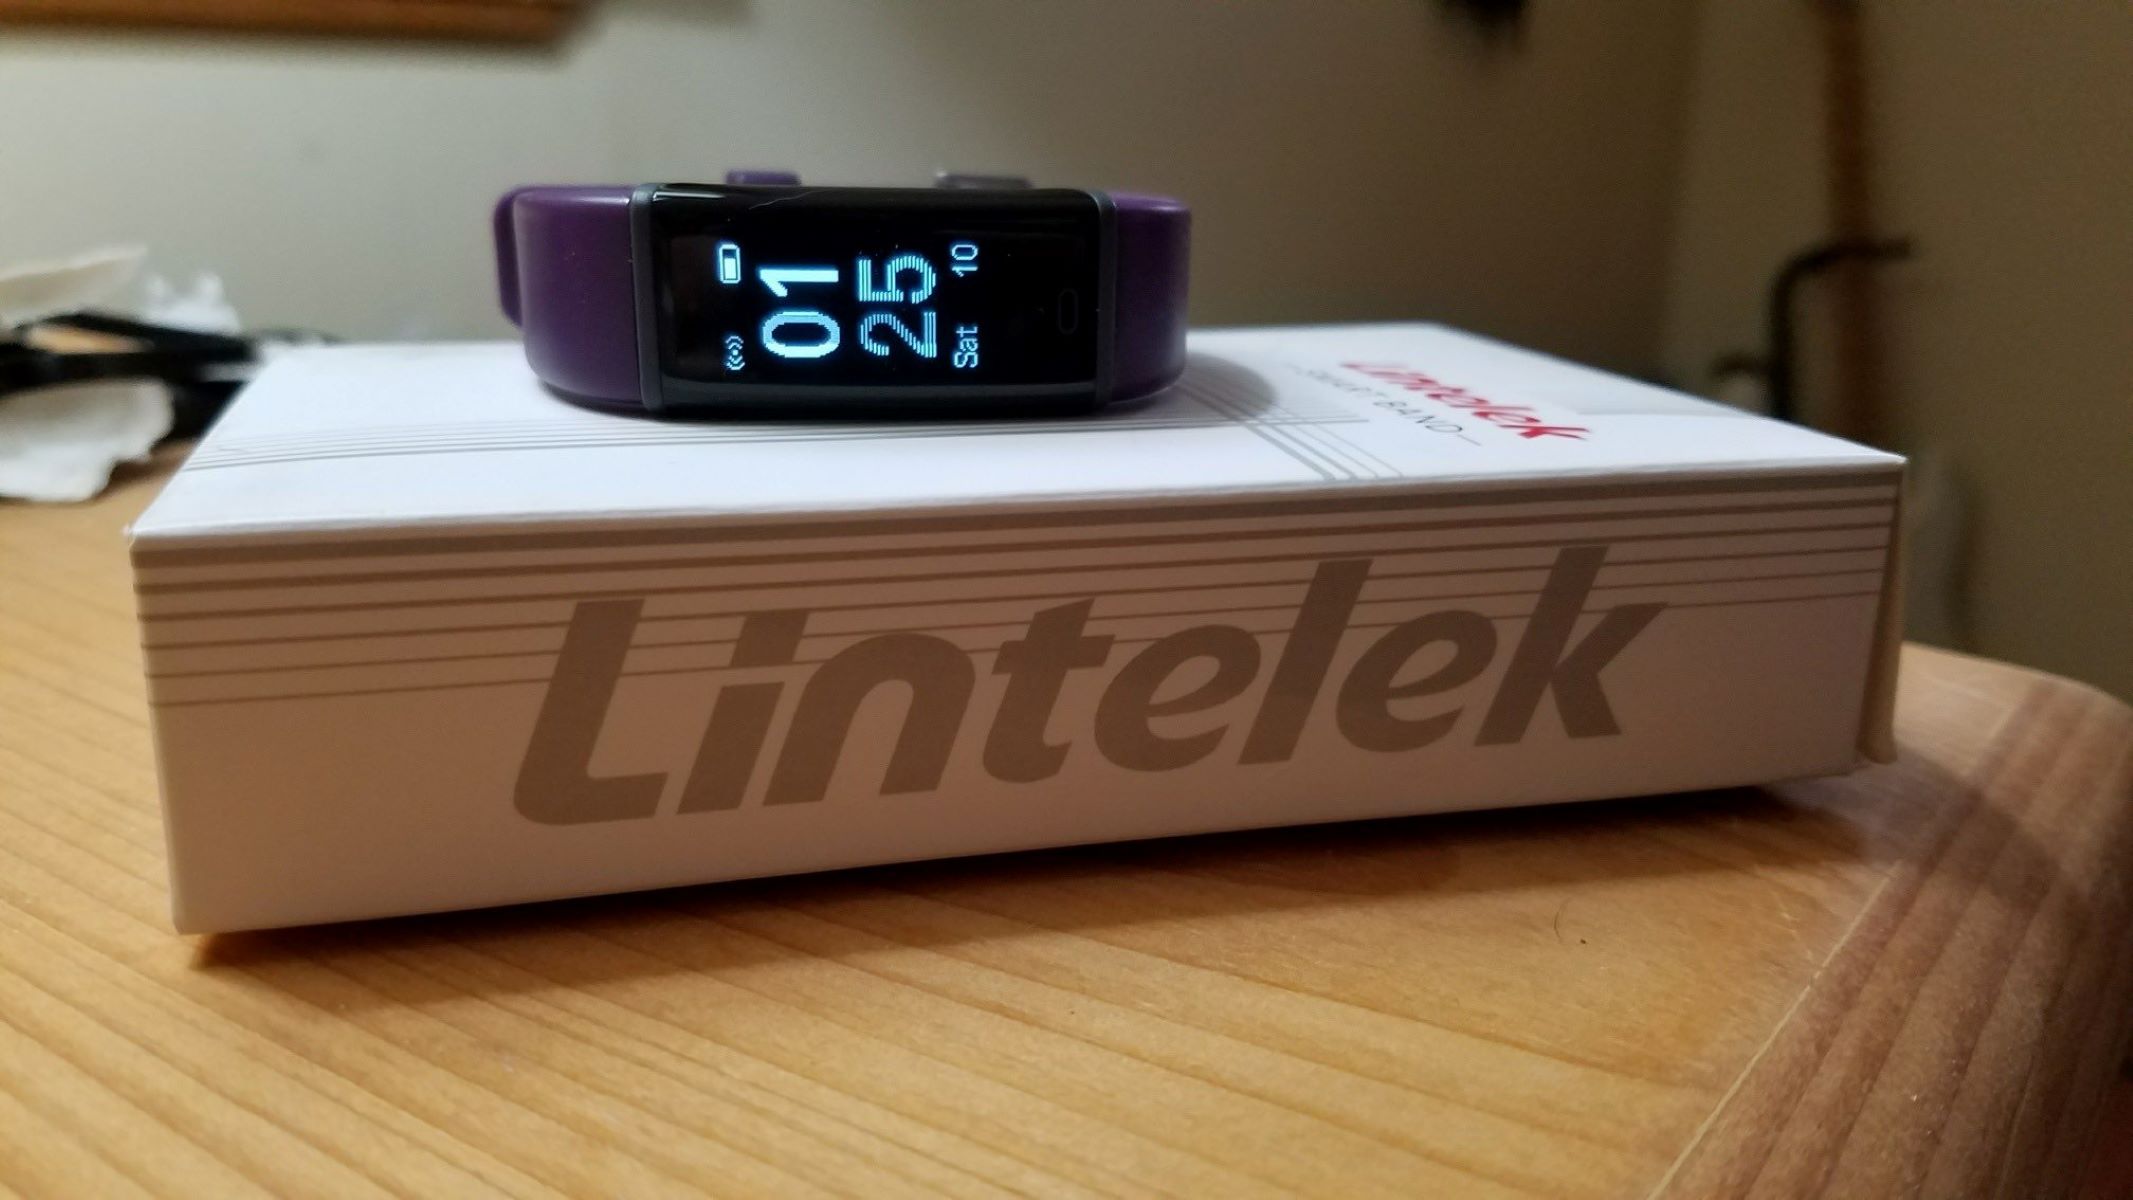 How To Use Lintelek Fitness Tracker